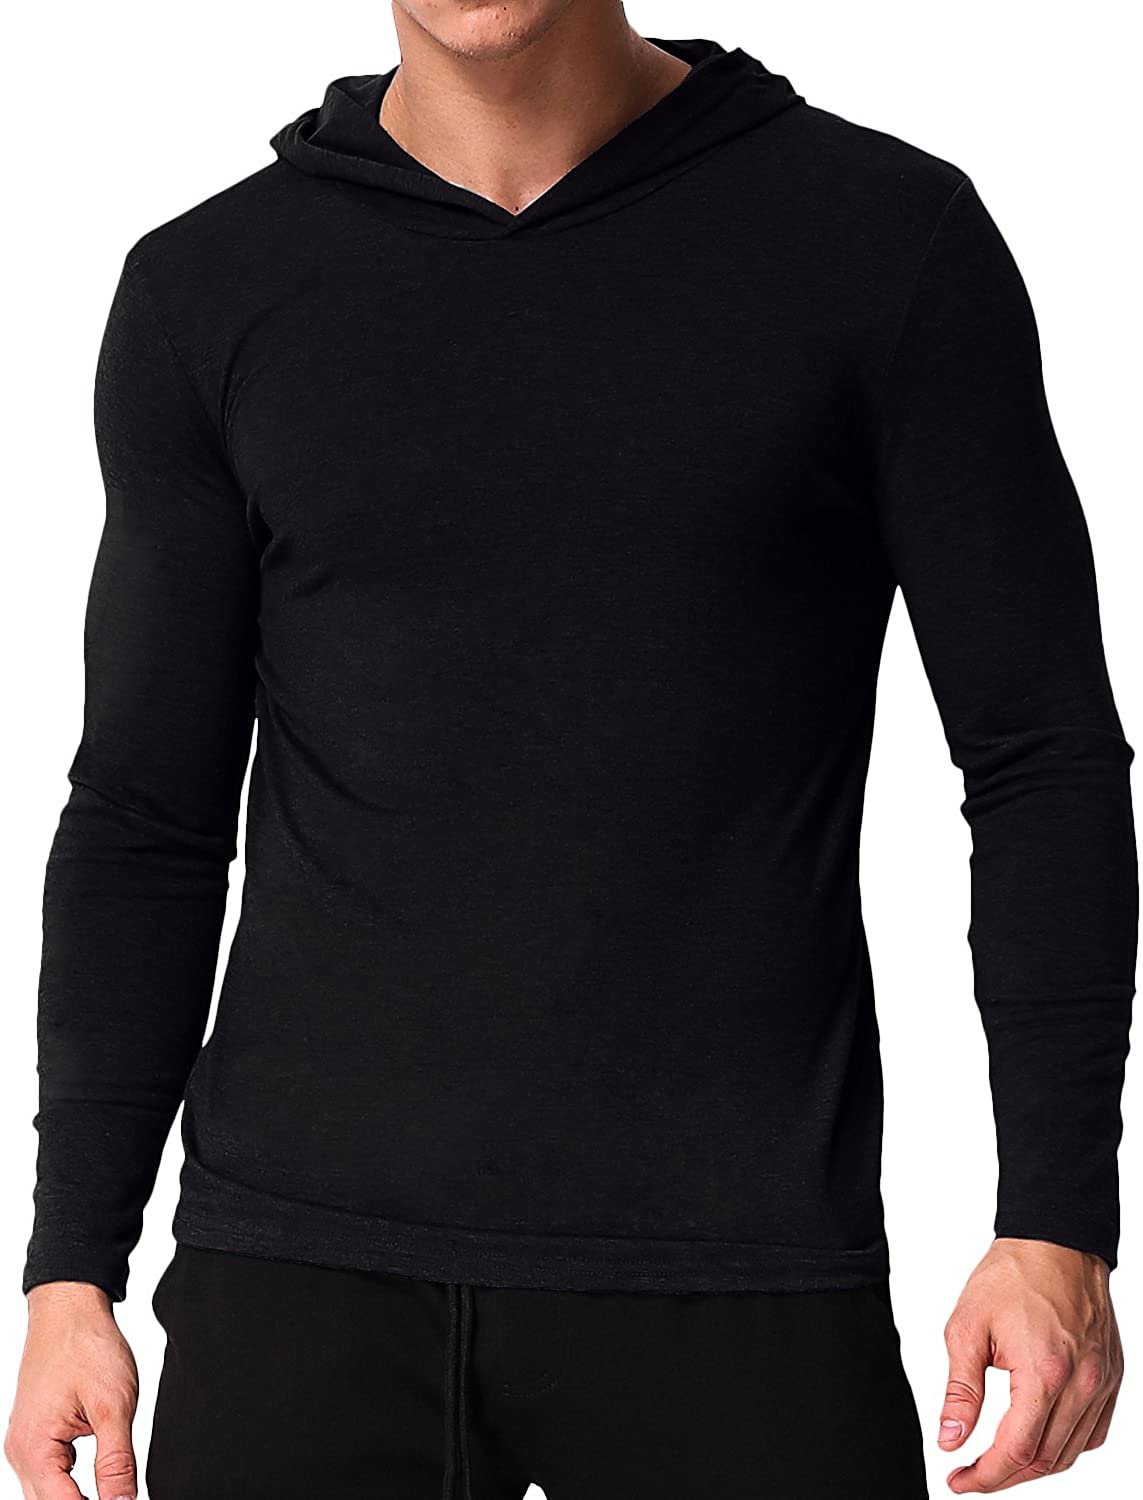 MODCHOK Mens Long Sleeve Pullover Hoodies T Shirt Casual Slim Fit Sweatshirt V Neck Tee Tops